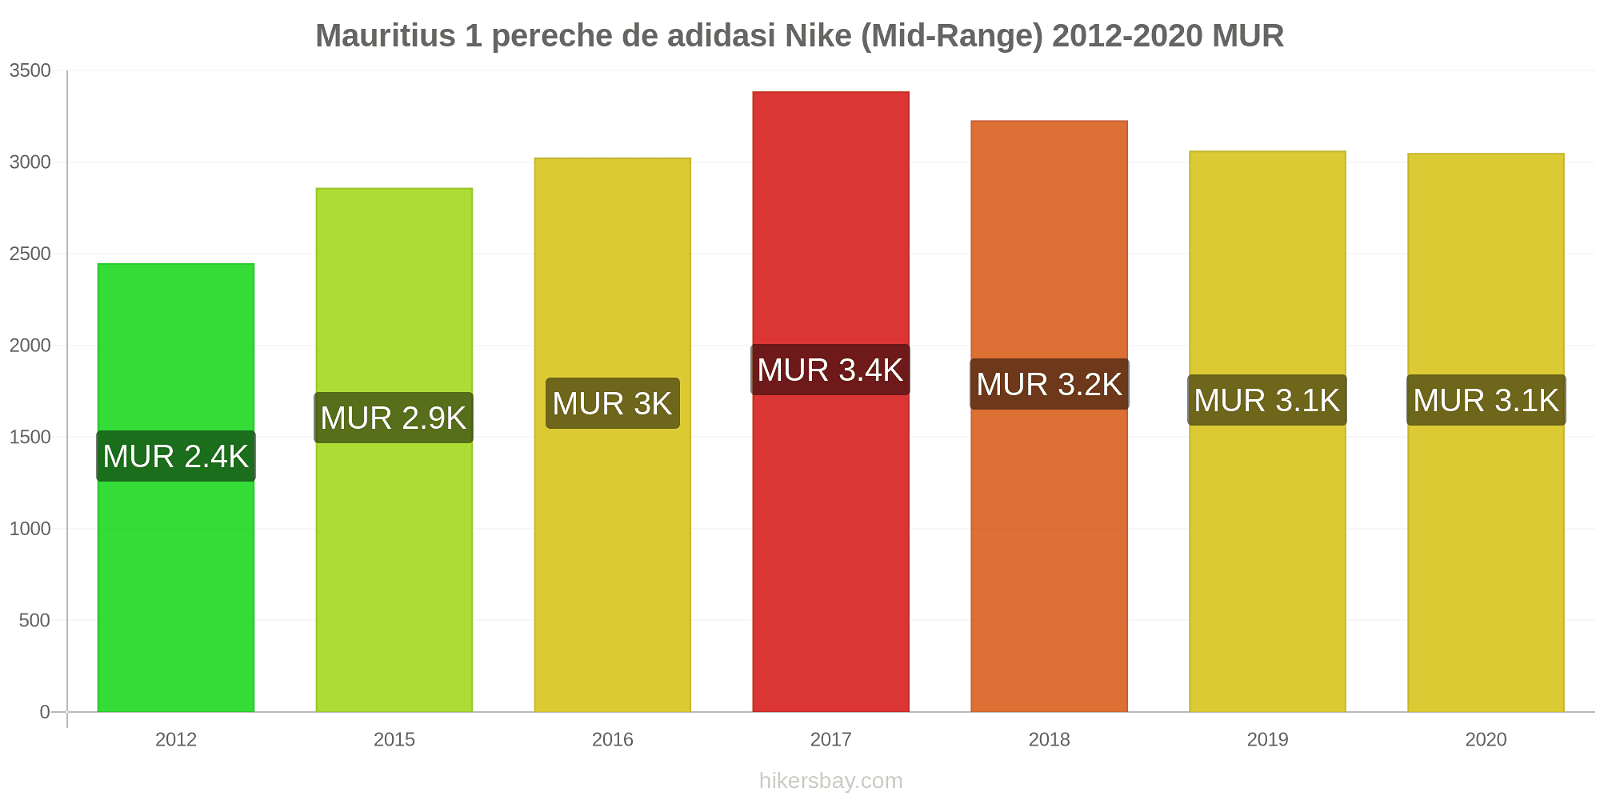 Mauritius modificări de preț 1 pereche de adidasi Nike (Mid-Range) hikersbay.com